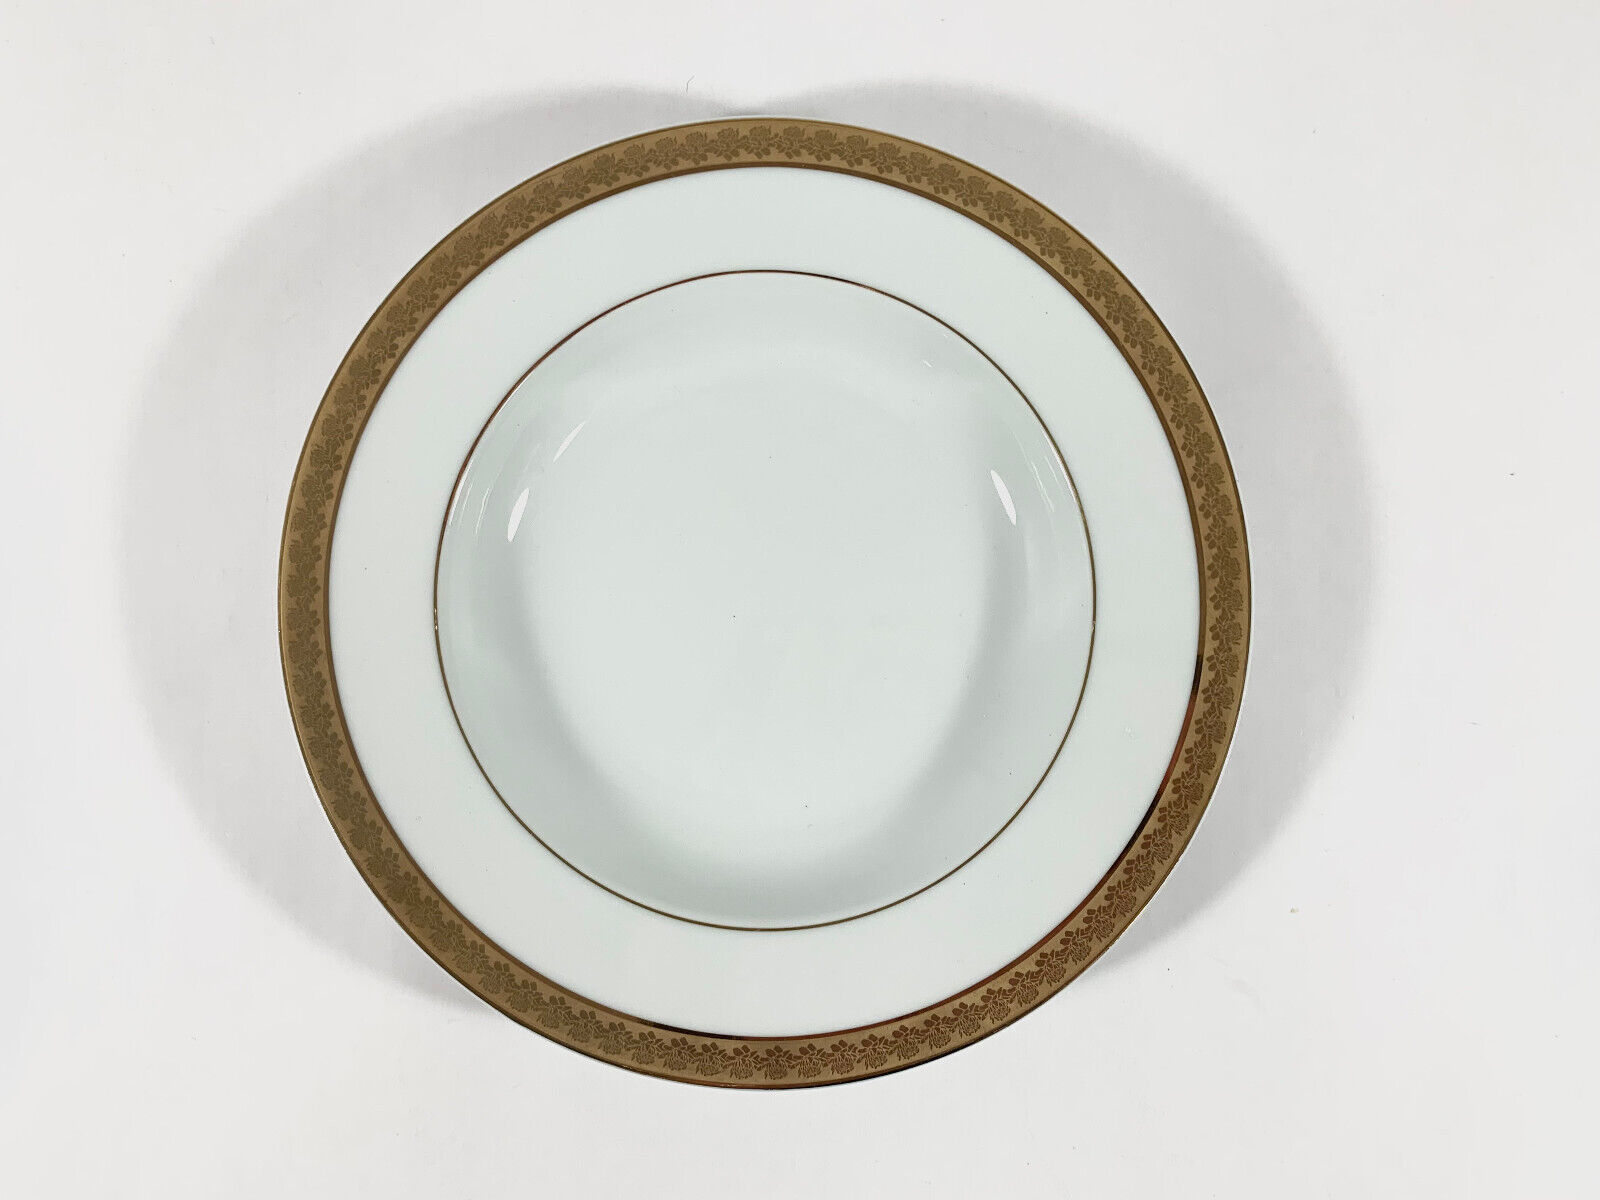 4x Bernardaud Rhapsody Limoge Gold Rim Deep Plates Soup Pasta Bowls Plates 22 cm